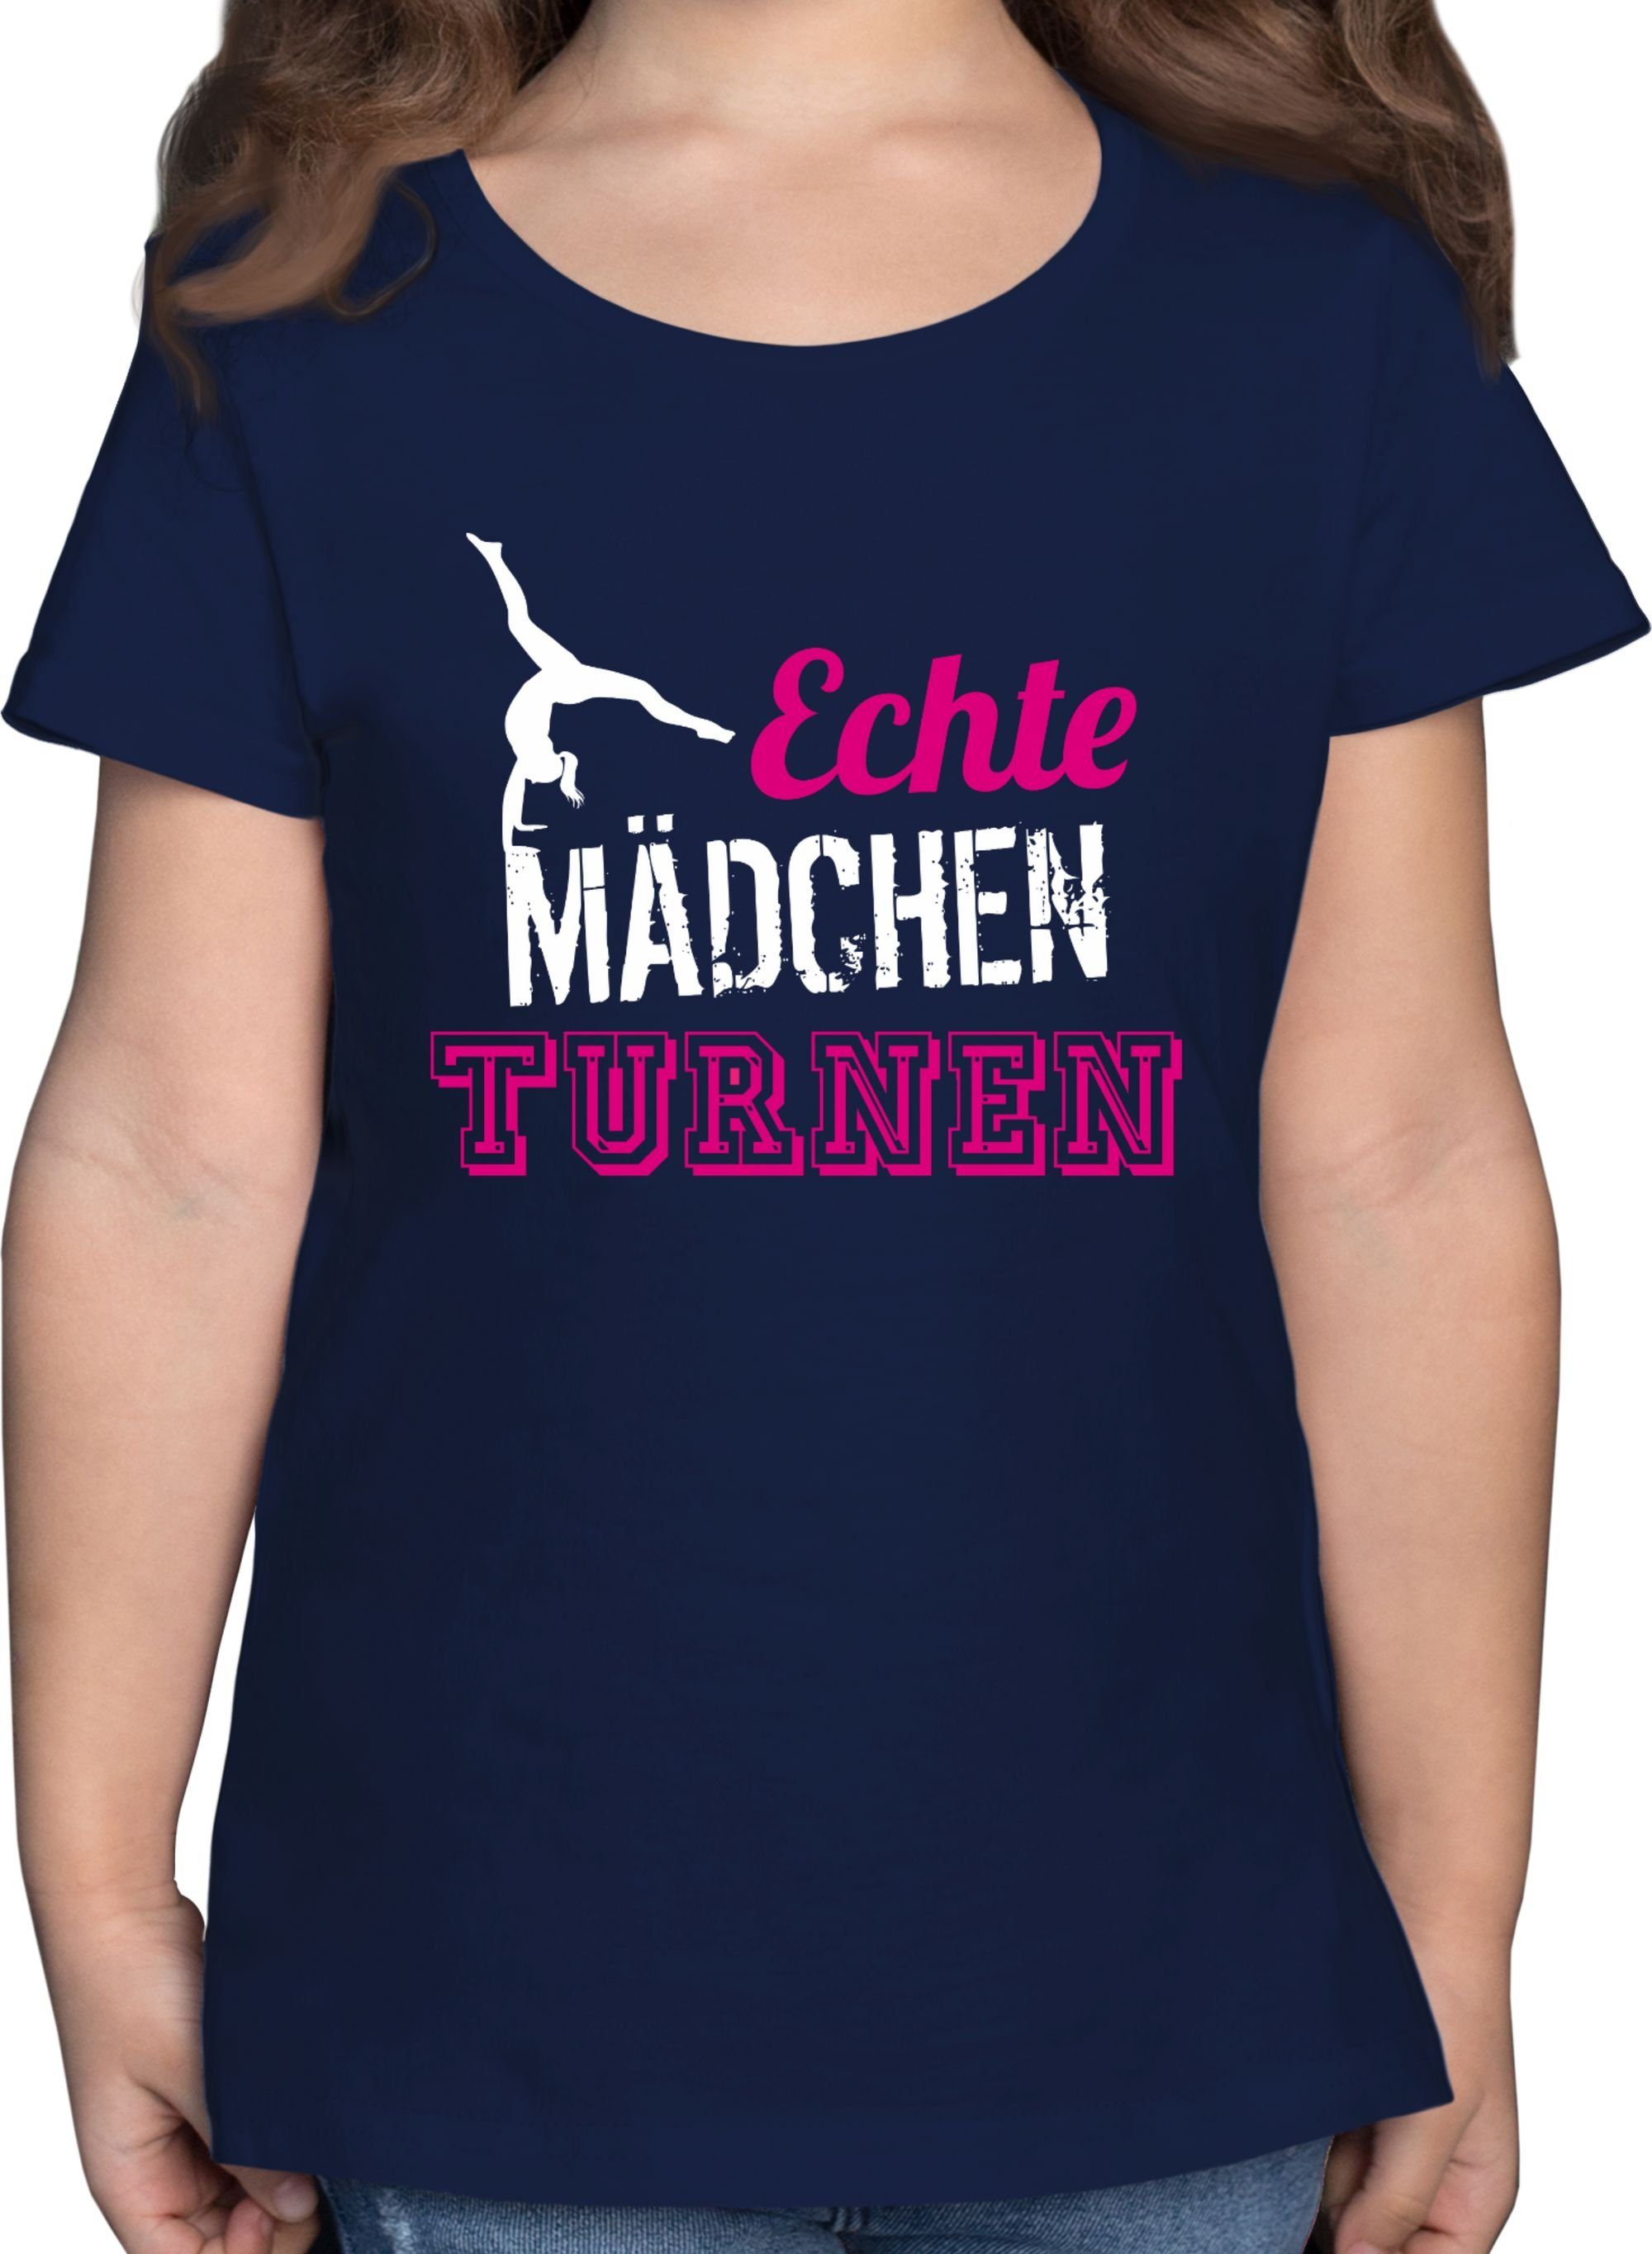 3 Shirtracer turnen - Kinder T-Shirt Turnerin Sport Kleidung Dunkelblau Geschenk Echte Mädchen